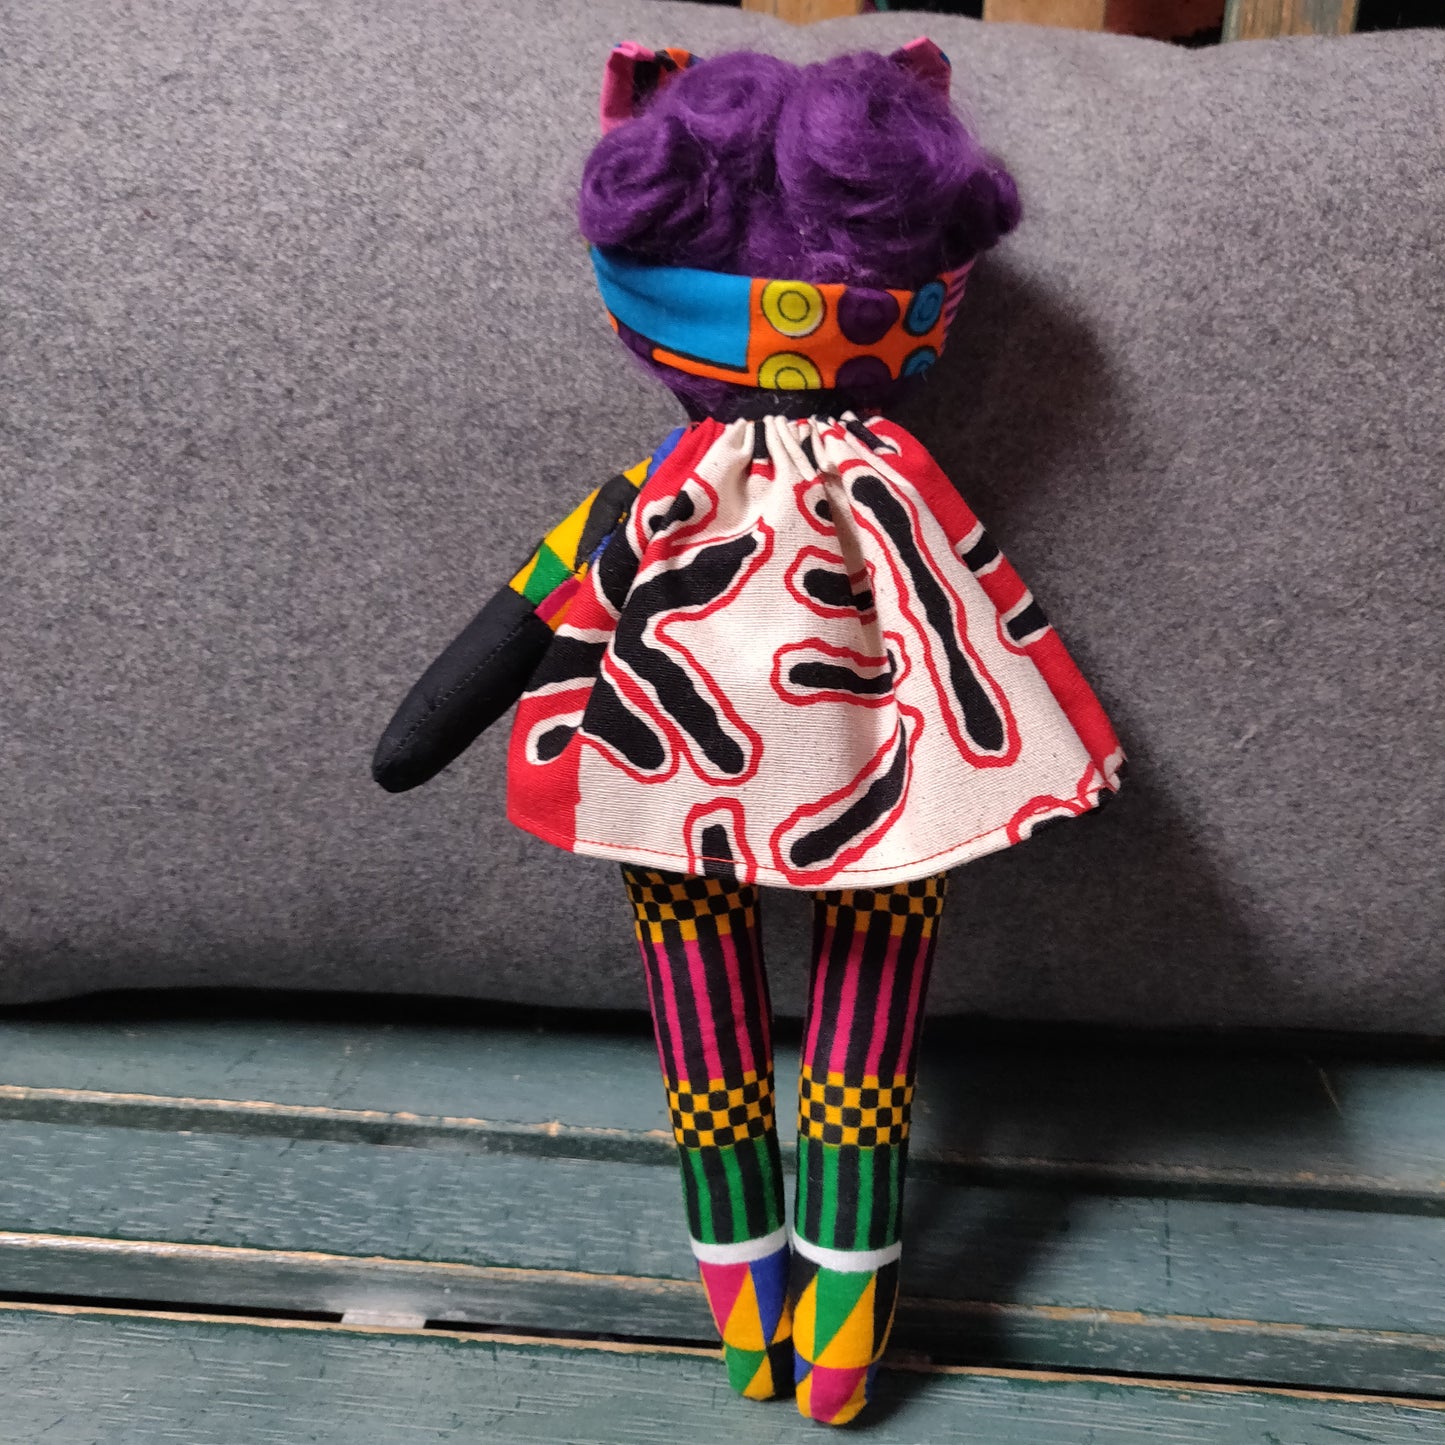 Little Darlings Handmade Cloth DOLLs by Cali Smith